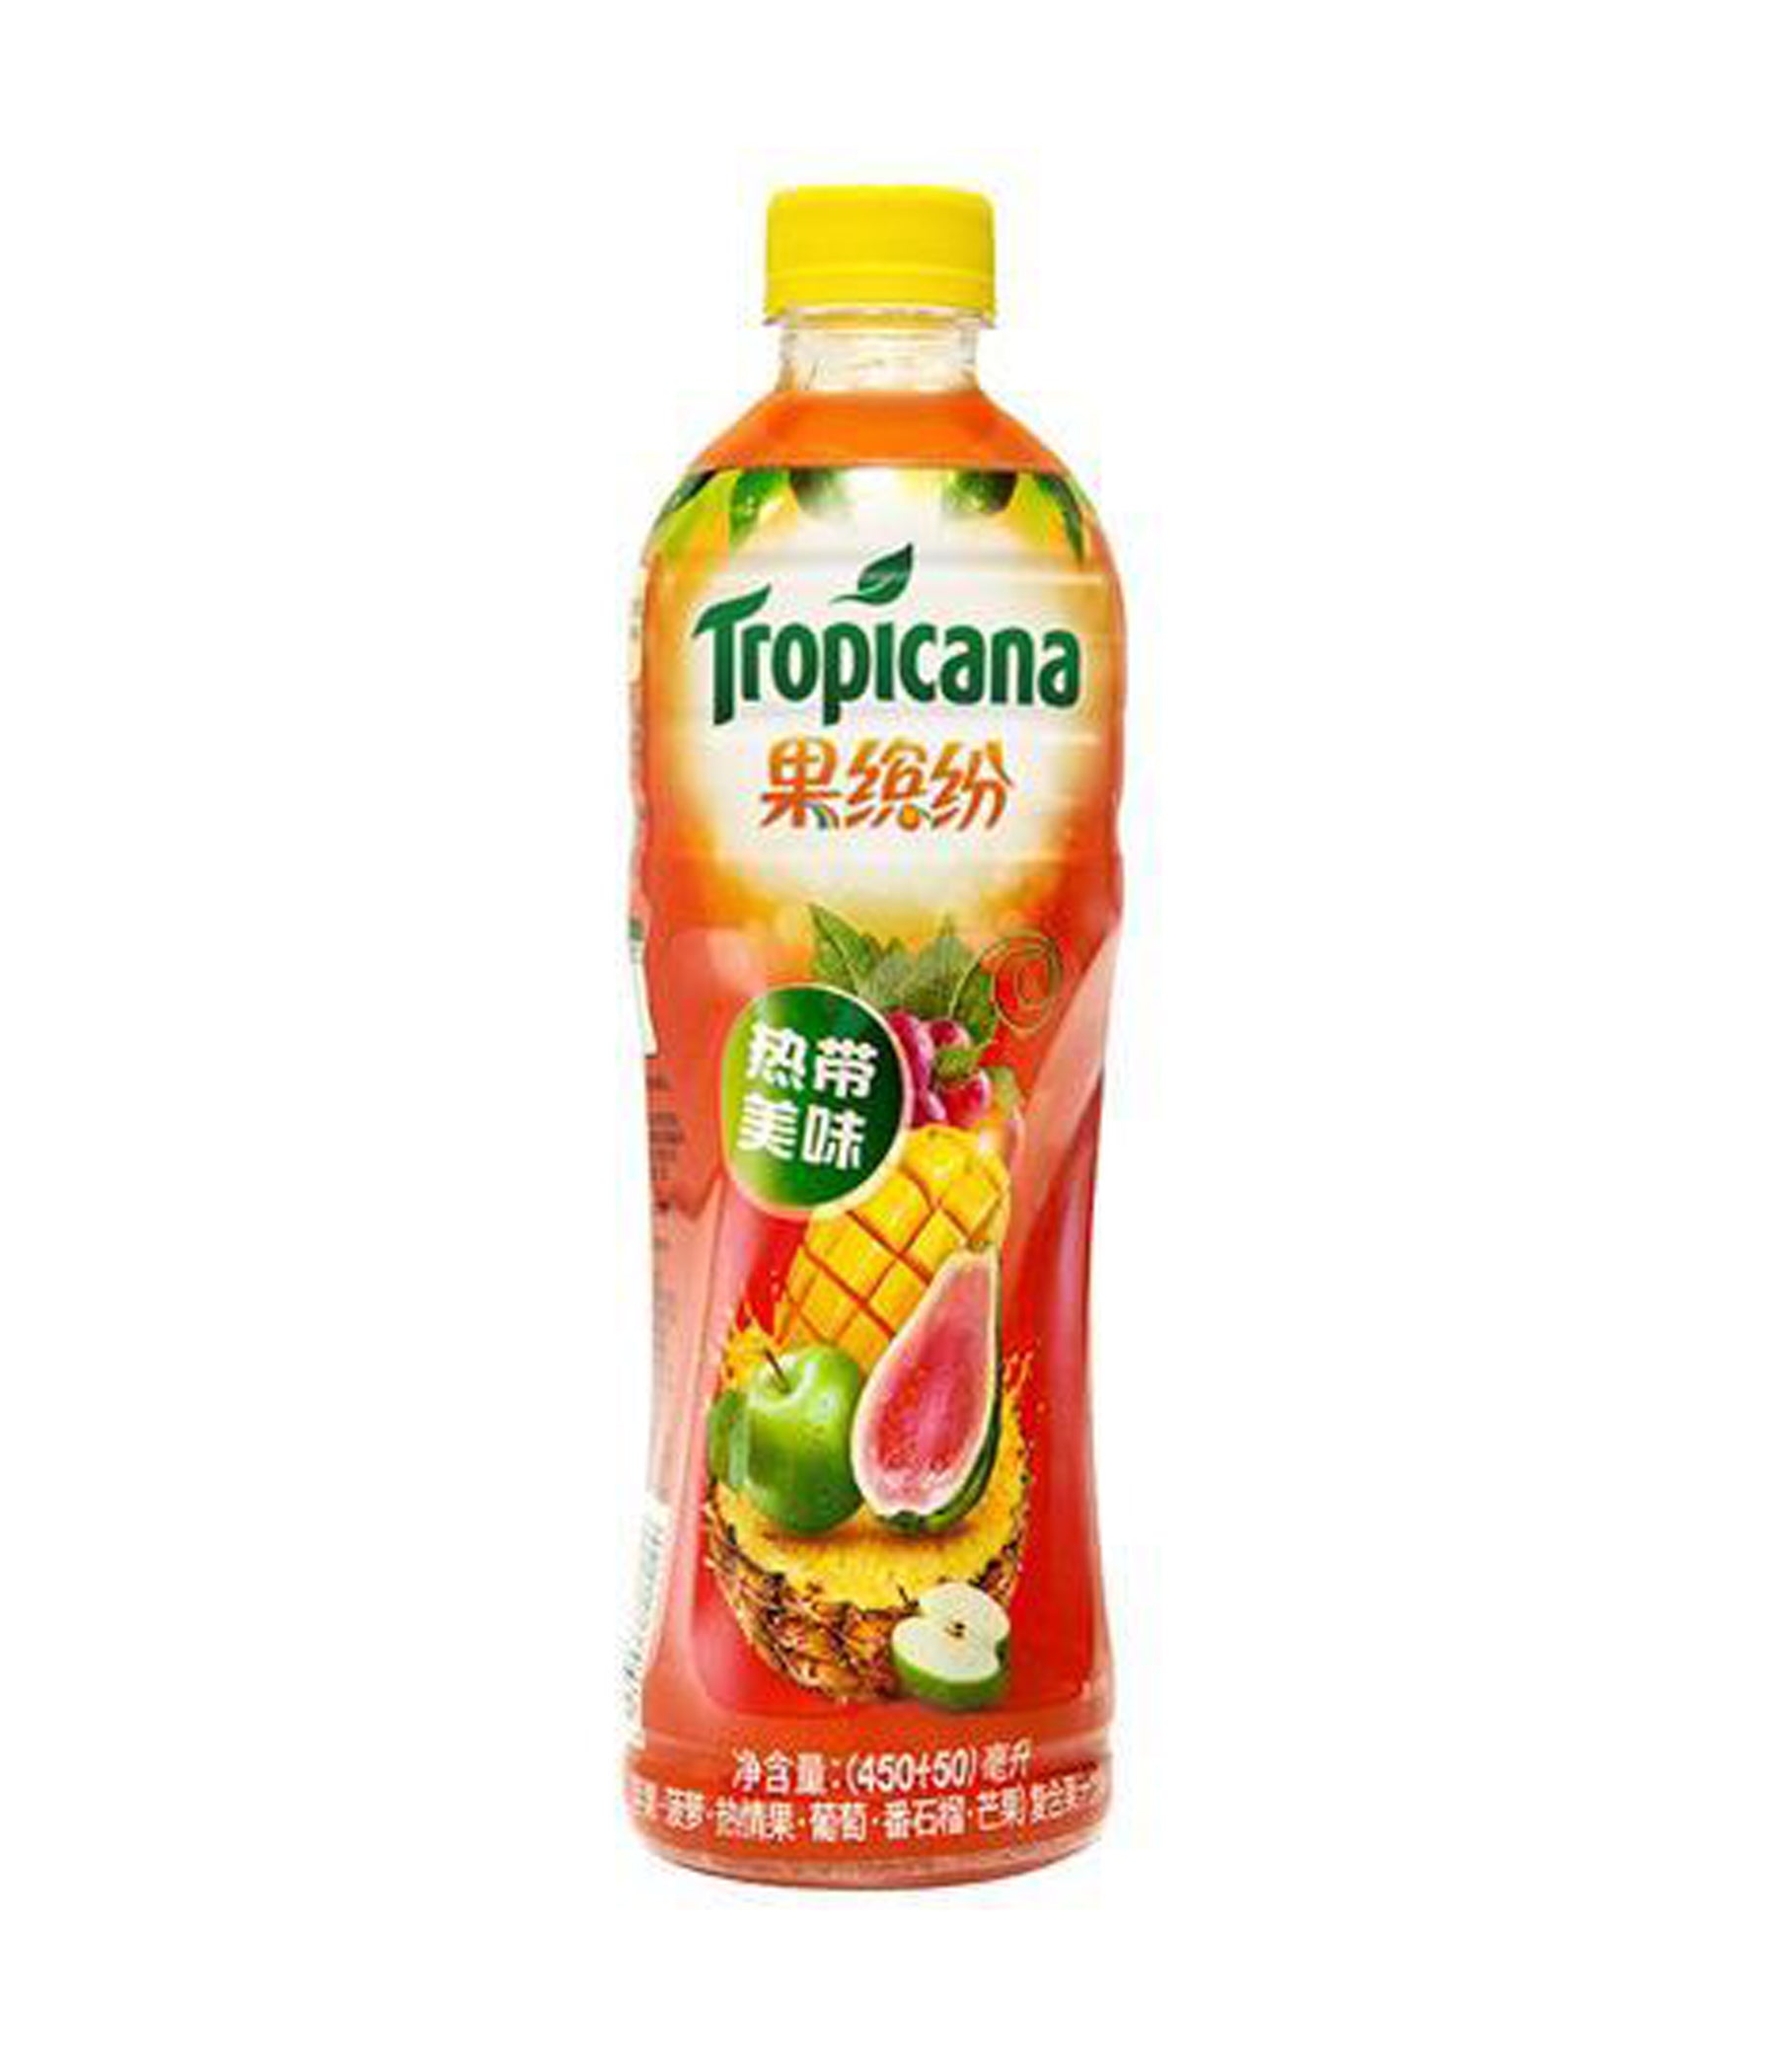 Tropicana Tropical Juice (500ml)